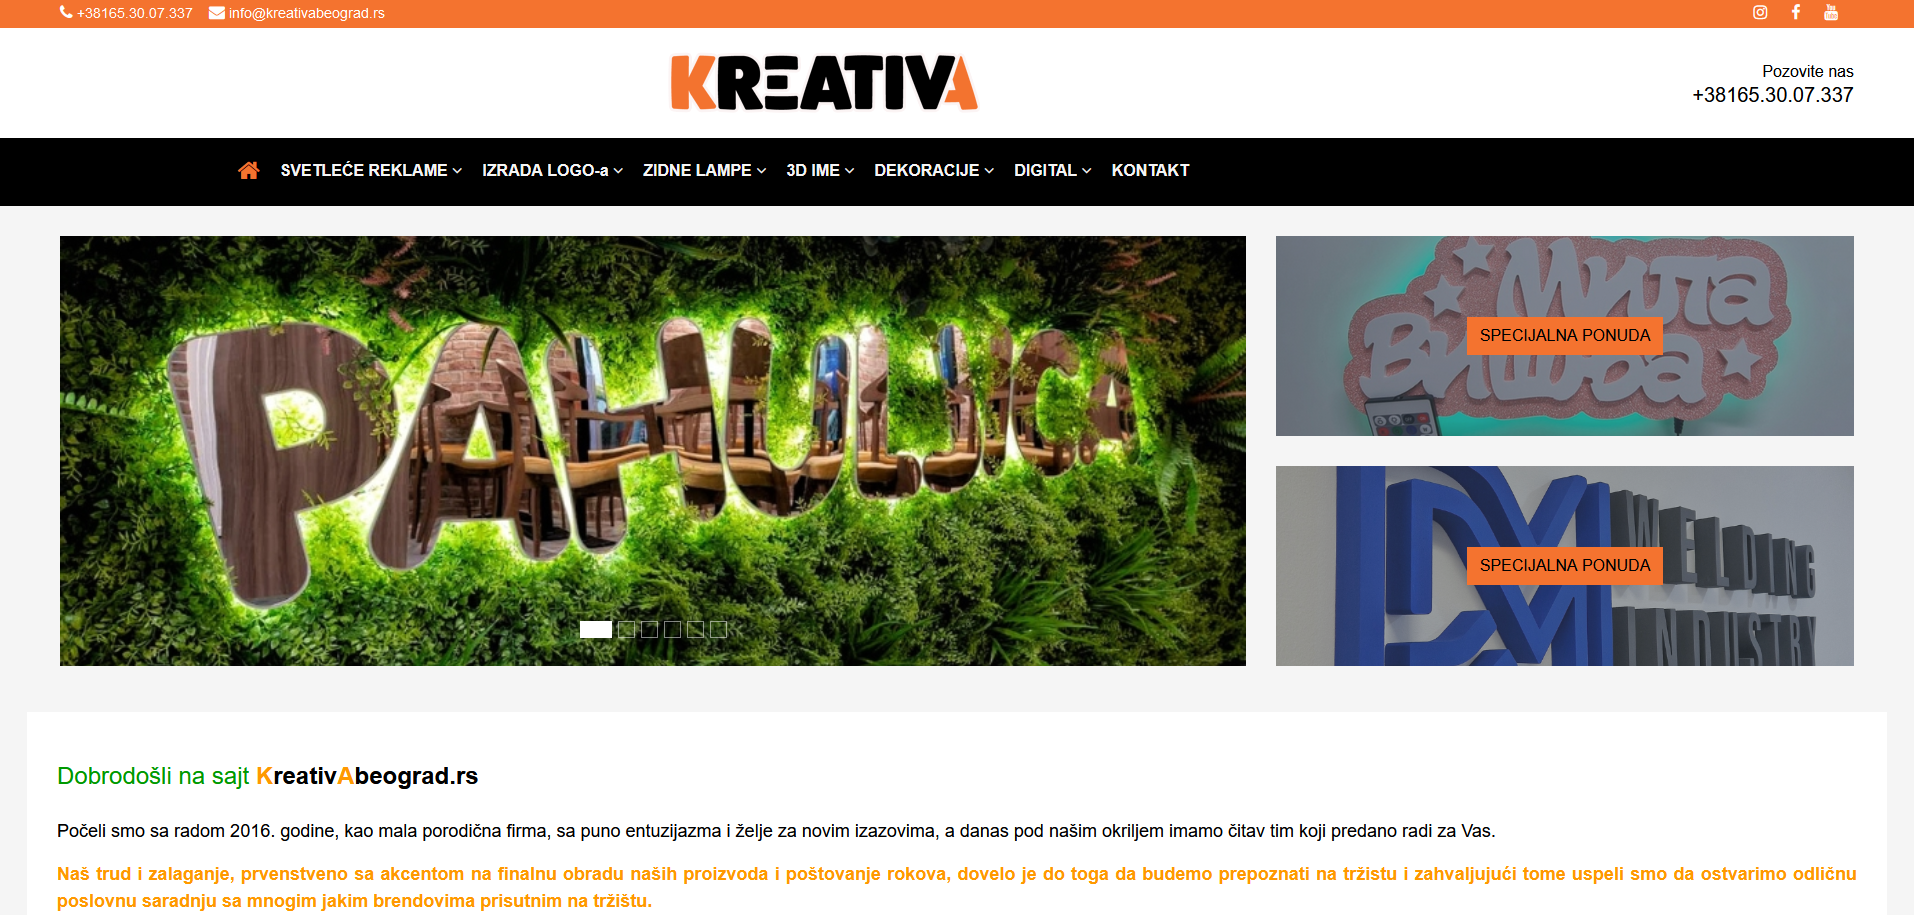 Kreativa Beograd